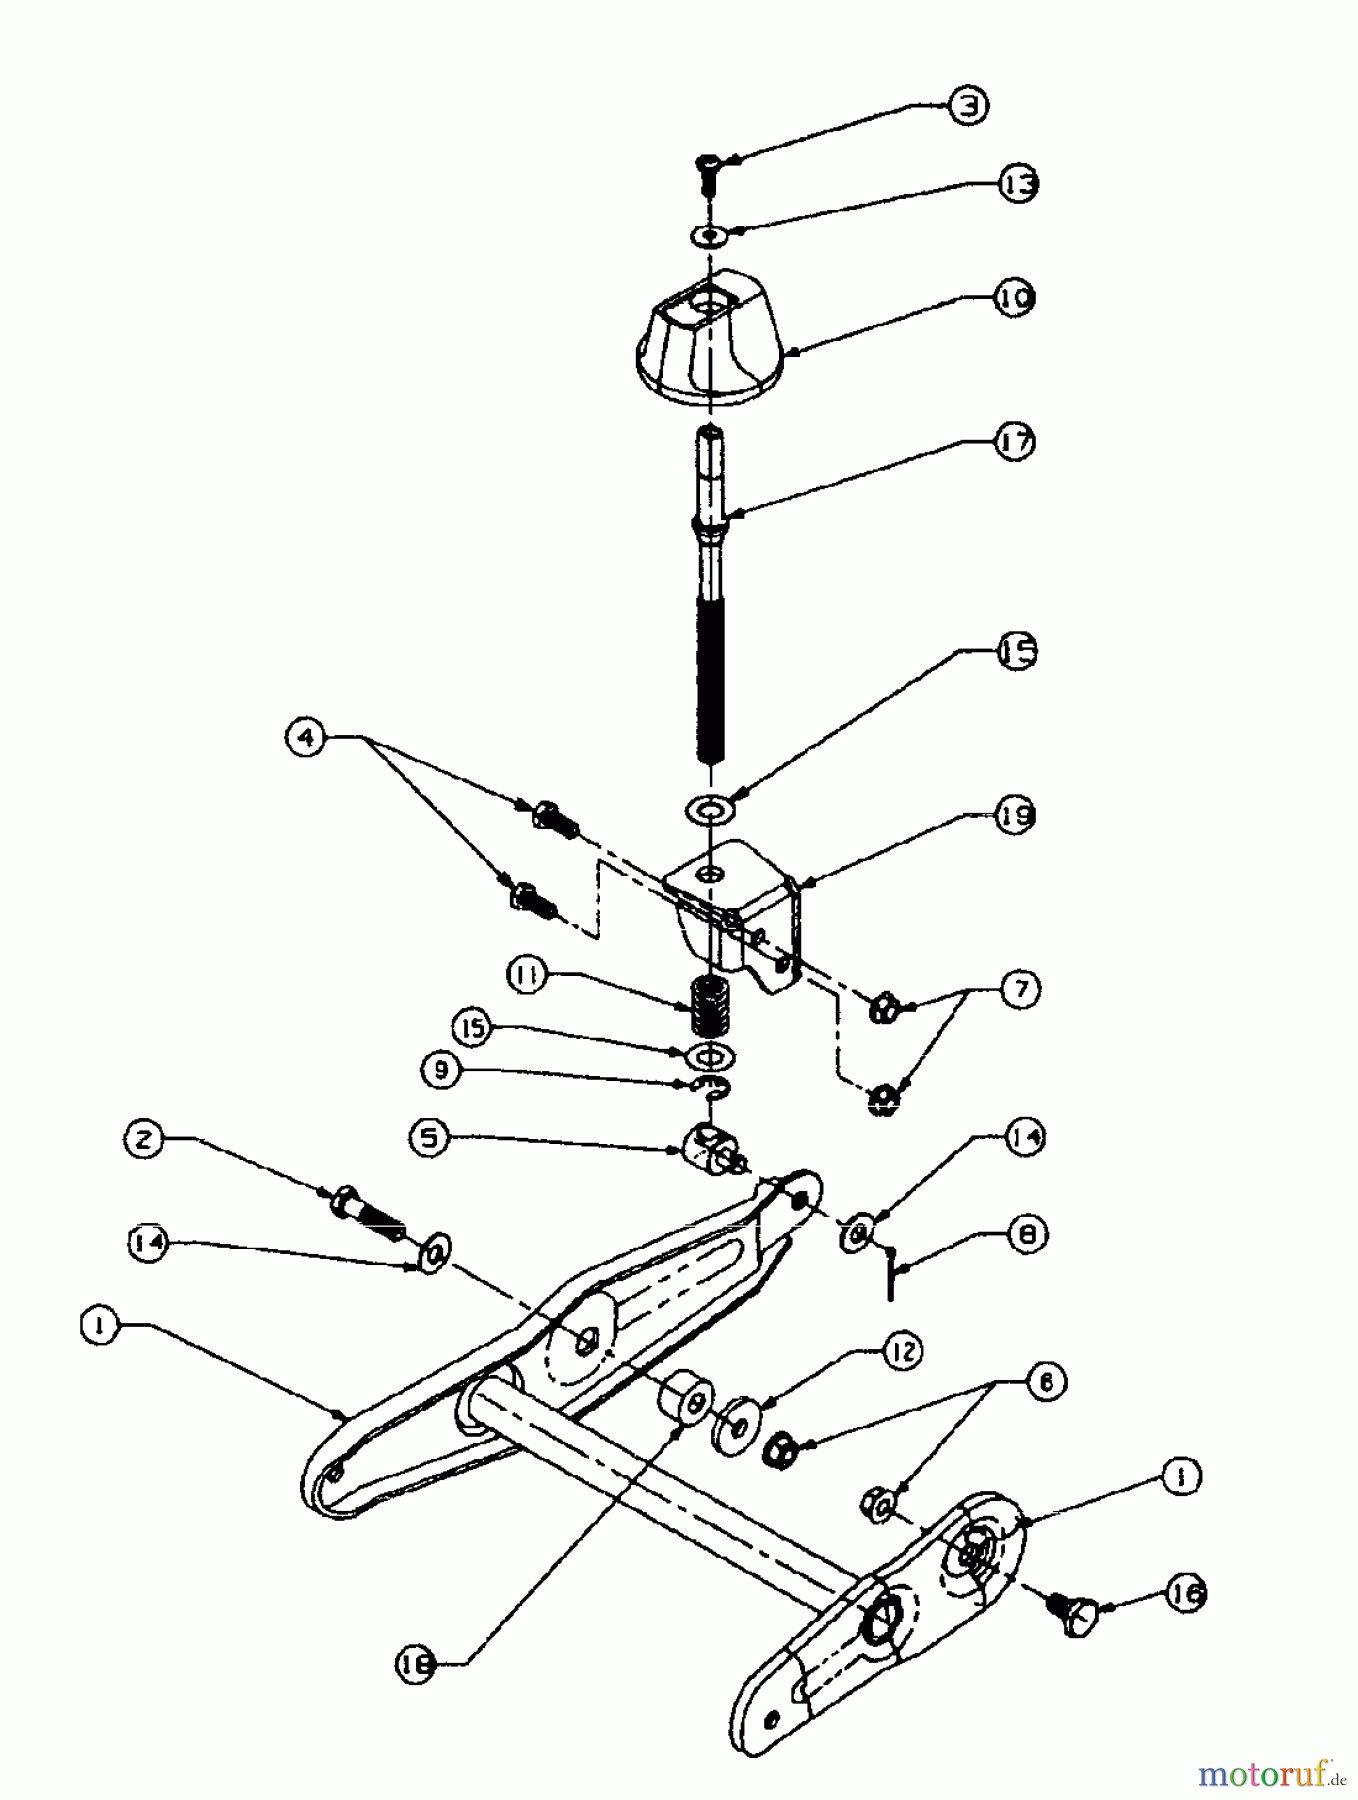  Gutbrod Leaf blower, Blower vac LSH 66-80 04201.04  (1996) Hight adjustment